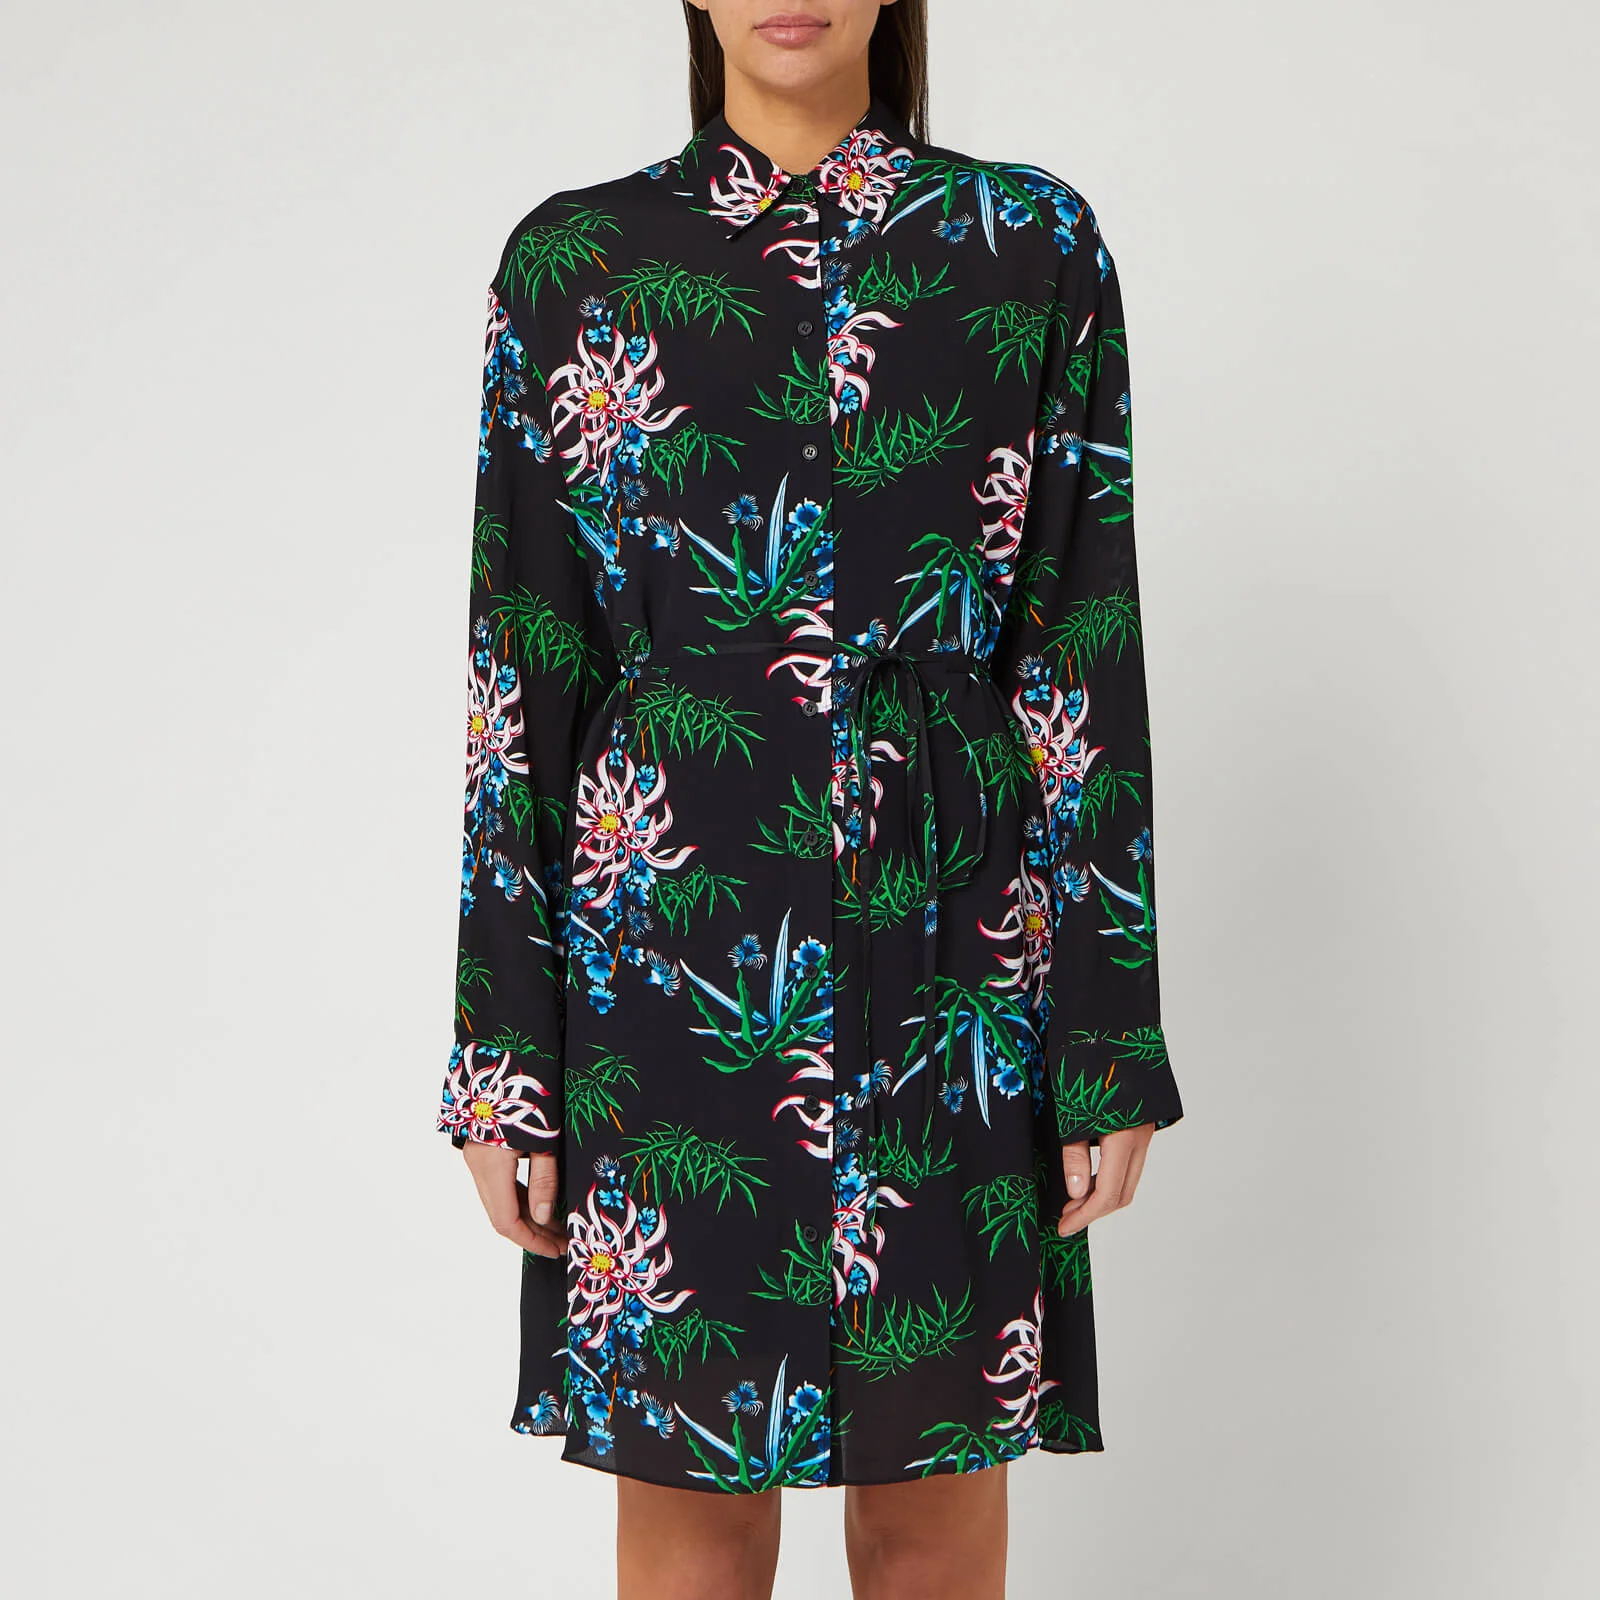 KENZO Women's Sea Lily Shirt Dress - Black Image 1